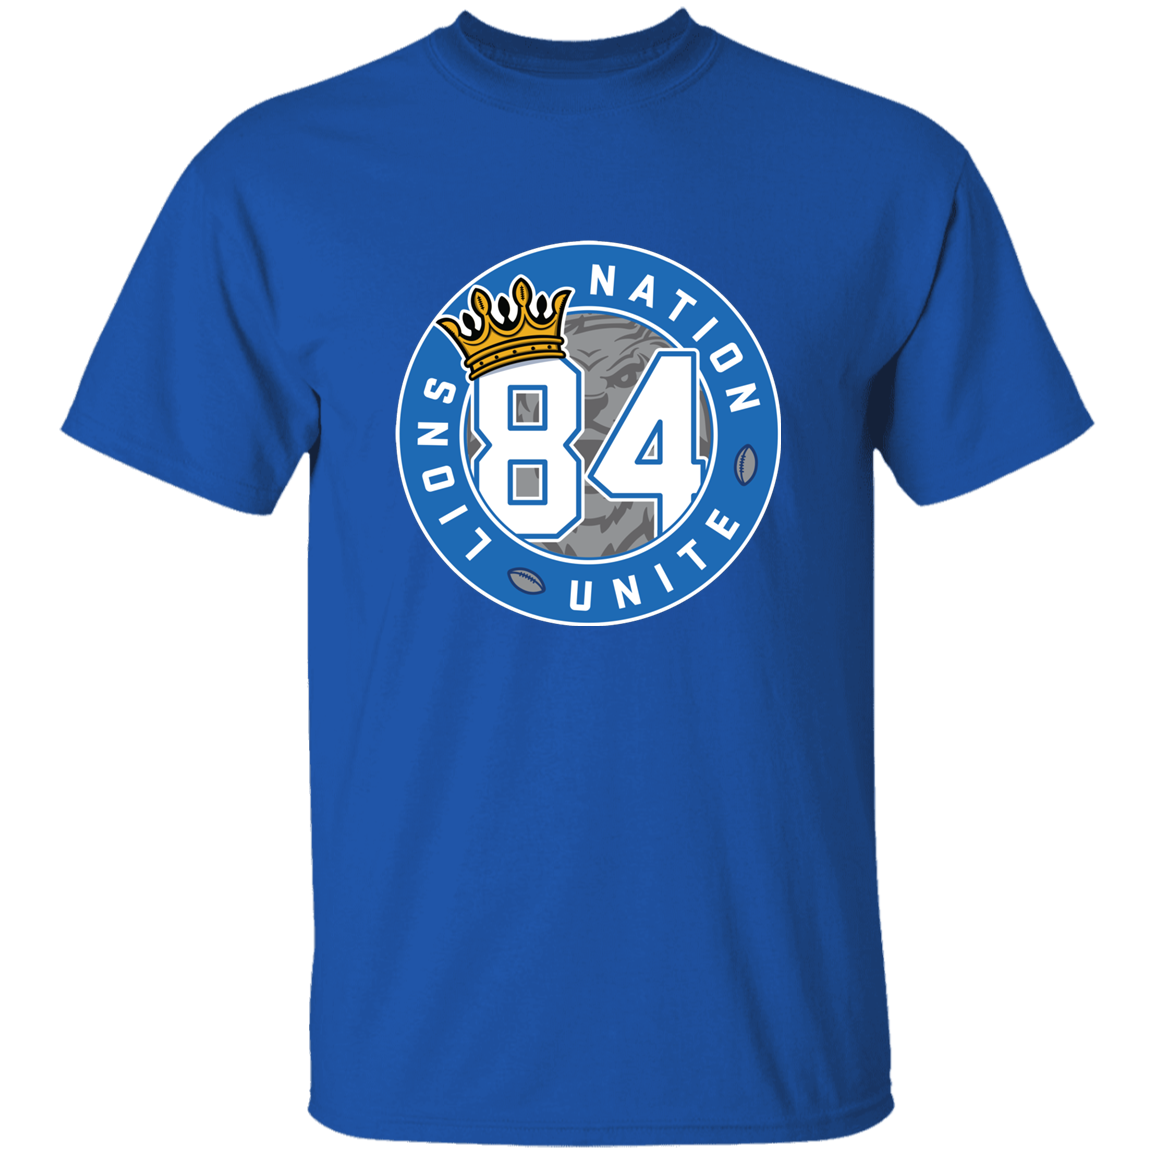 No. 84 Lions Nation Unite® Youth T-Shirt